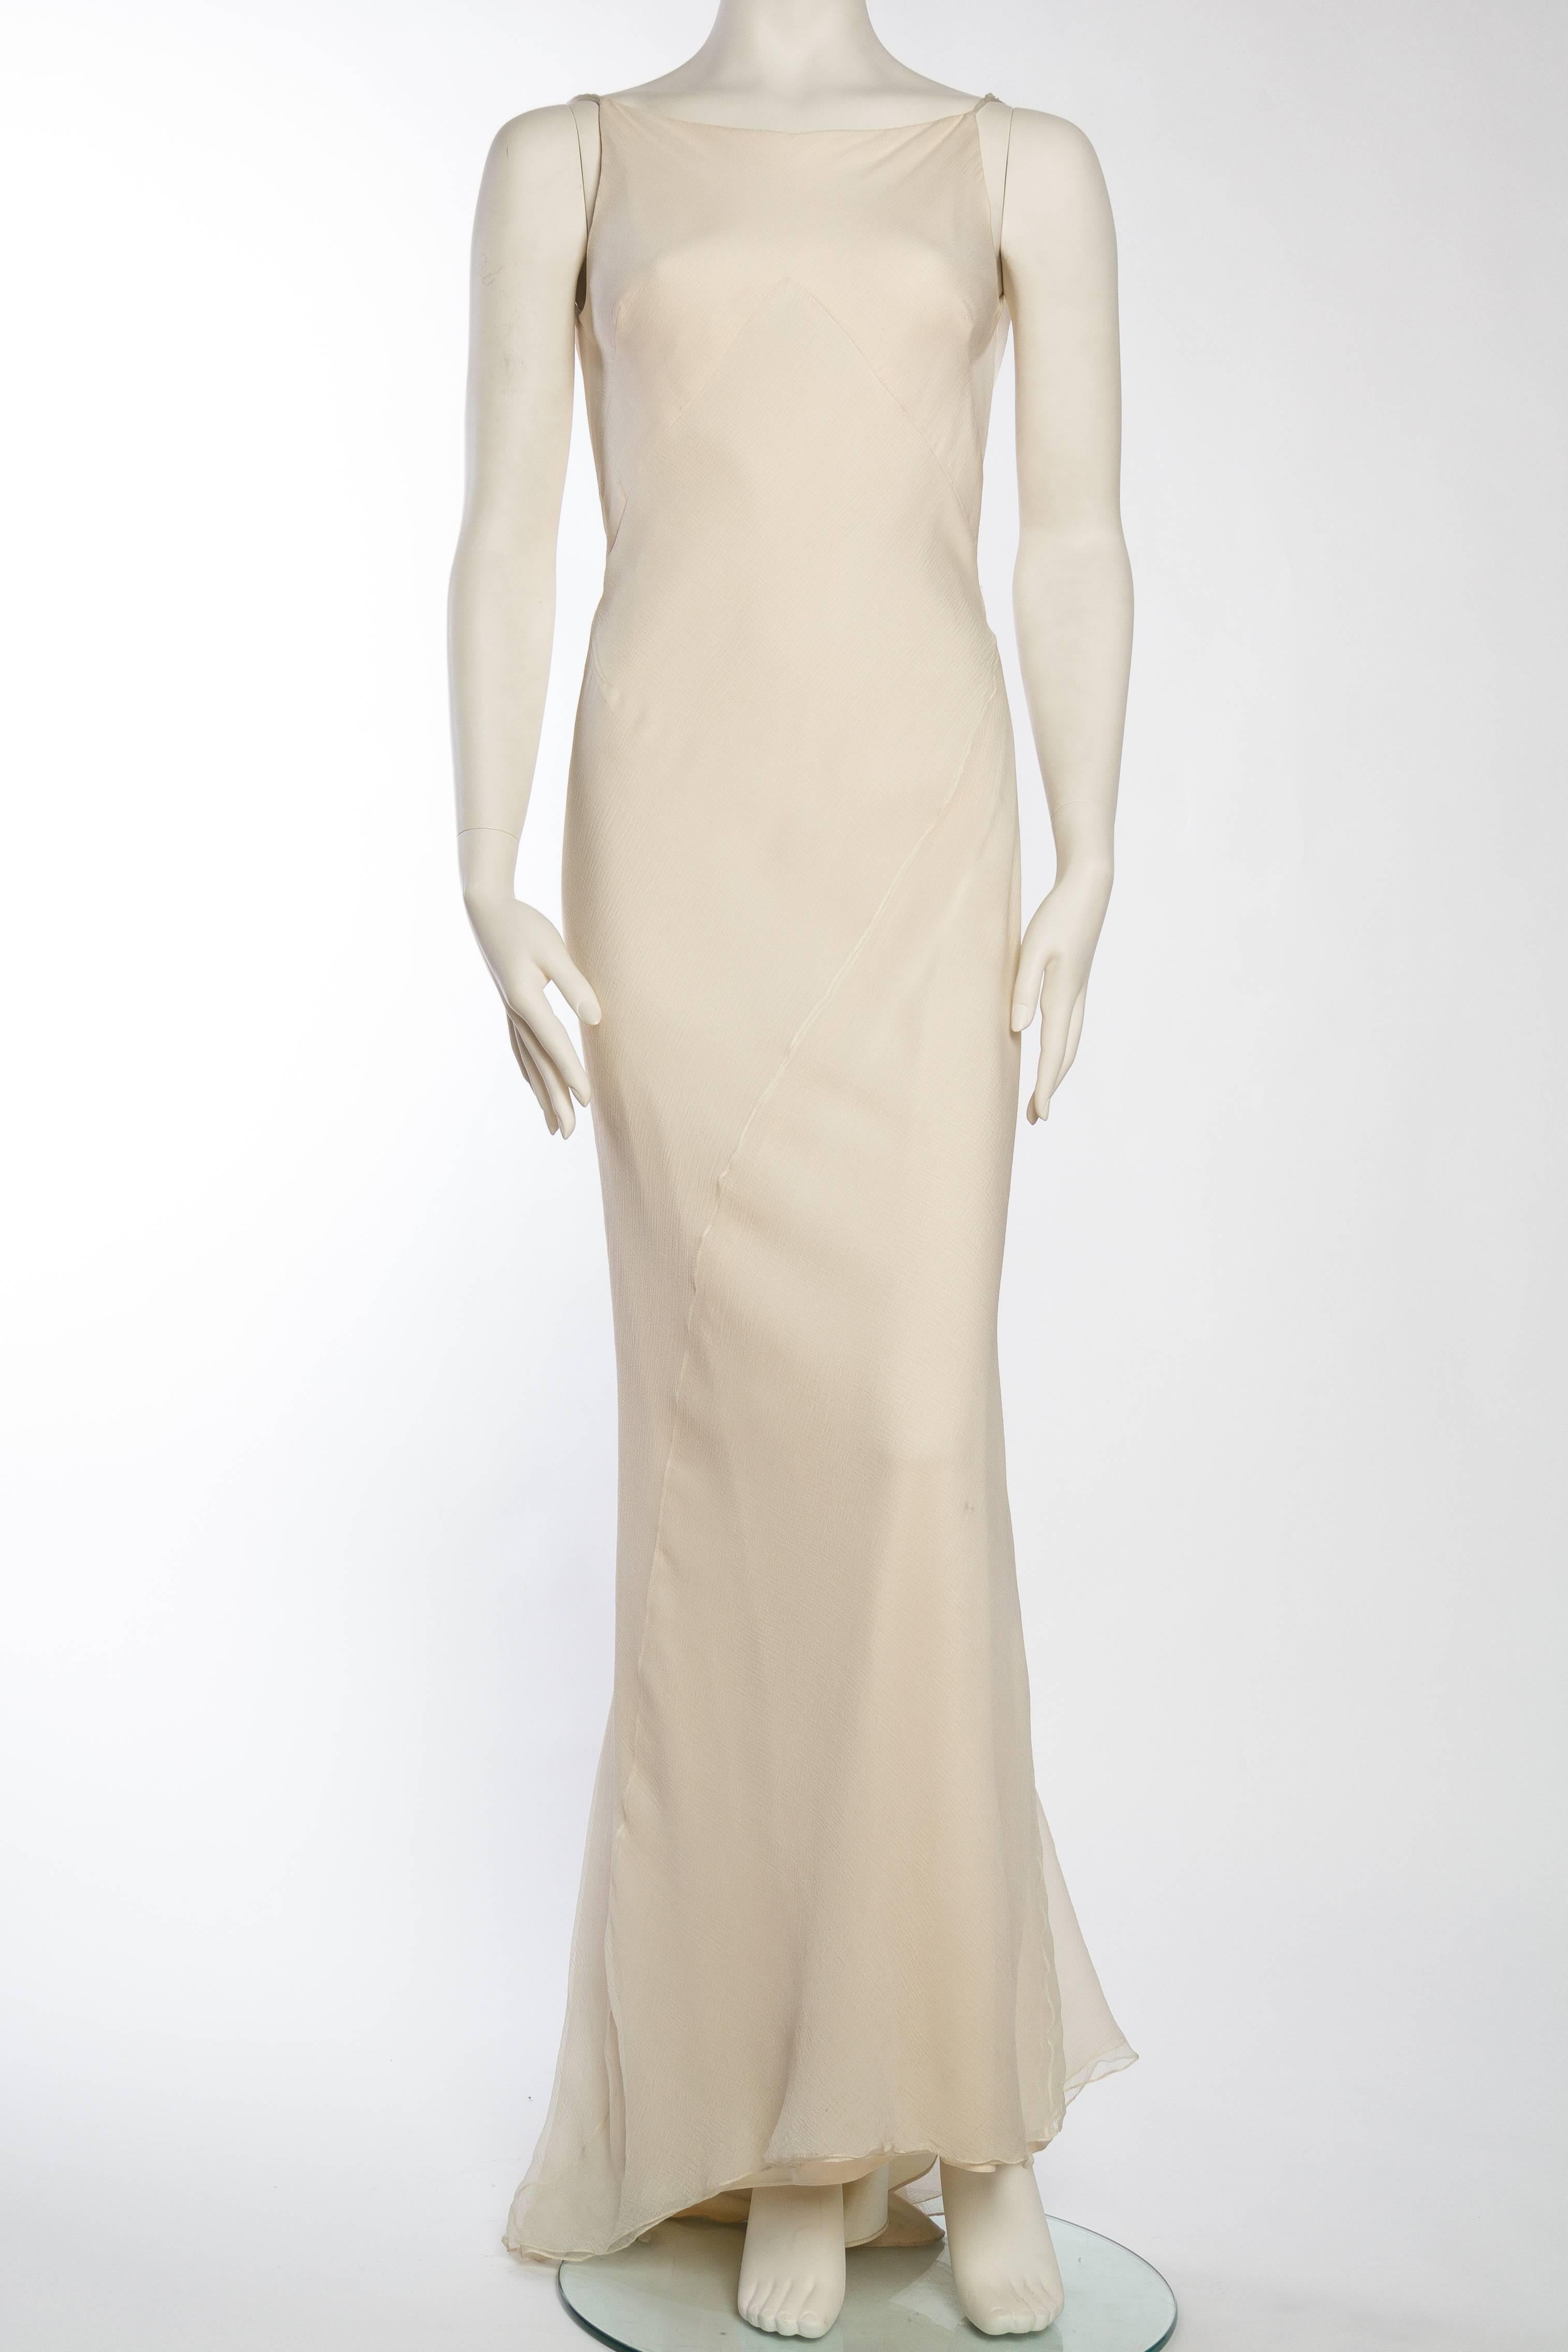 1930s backless dress